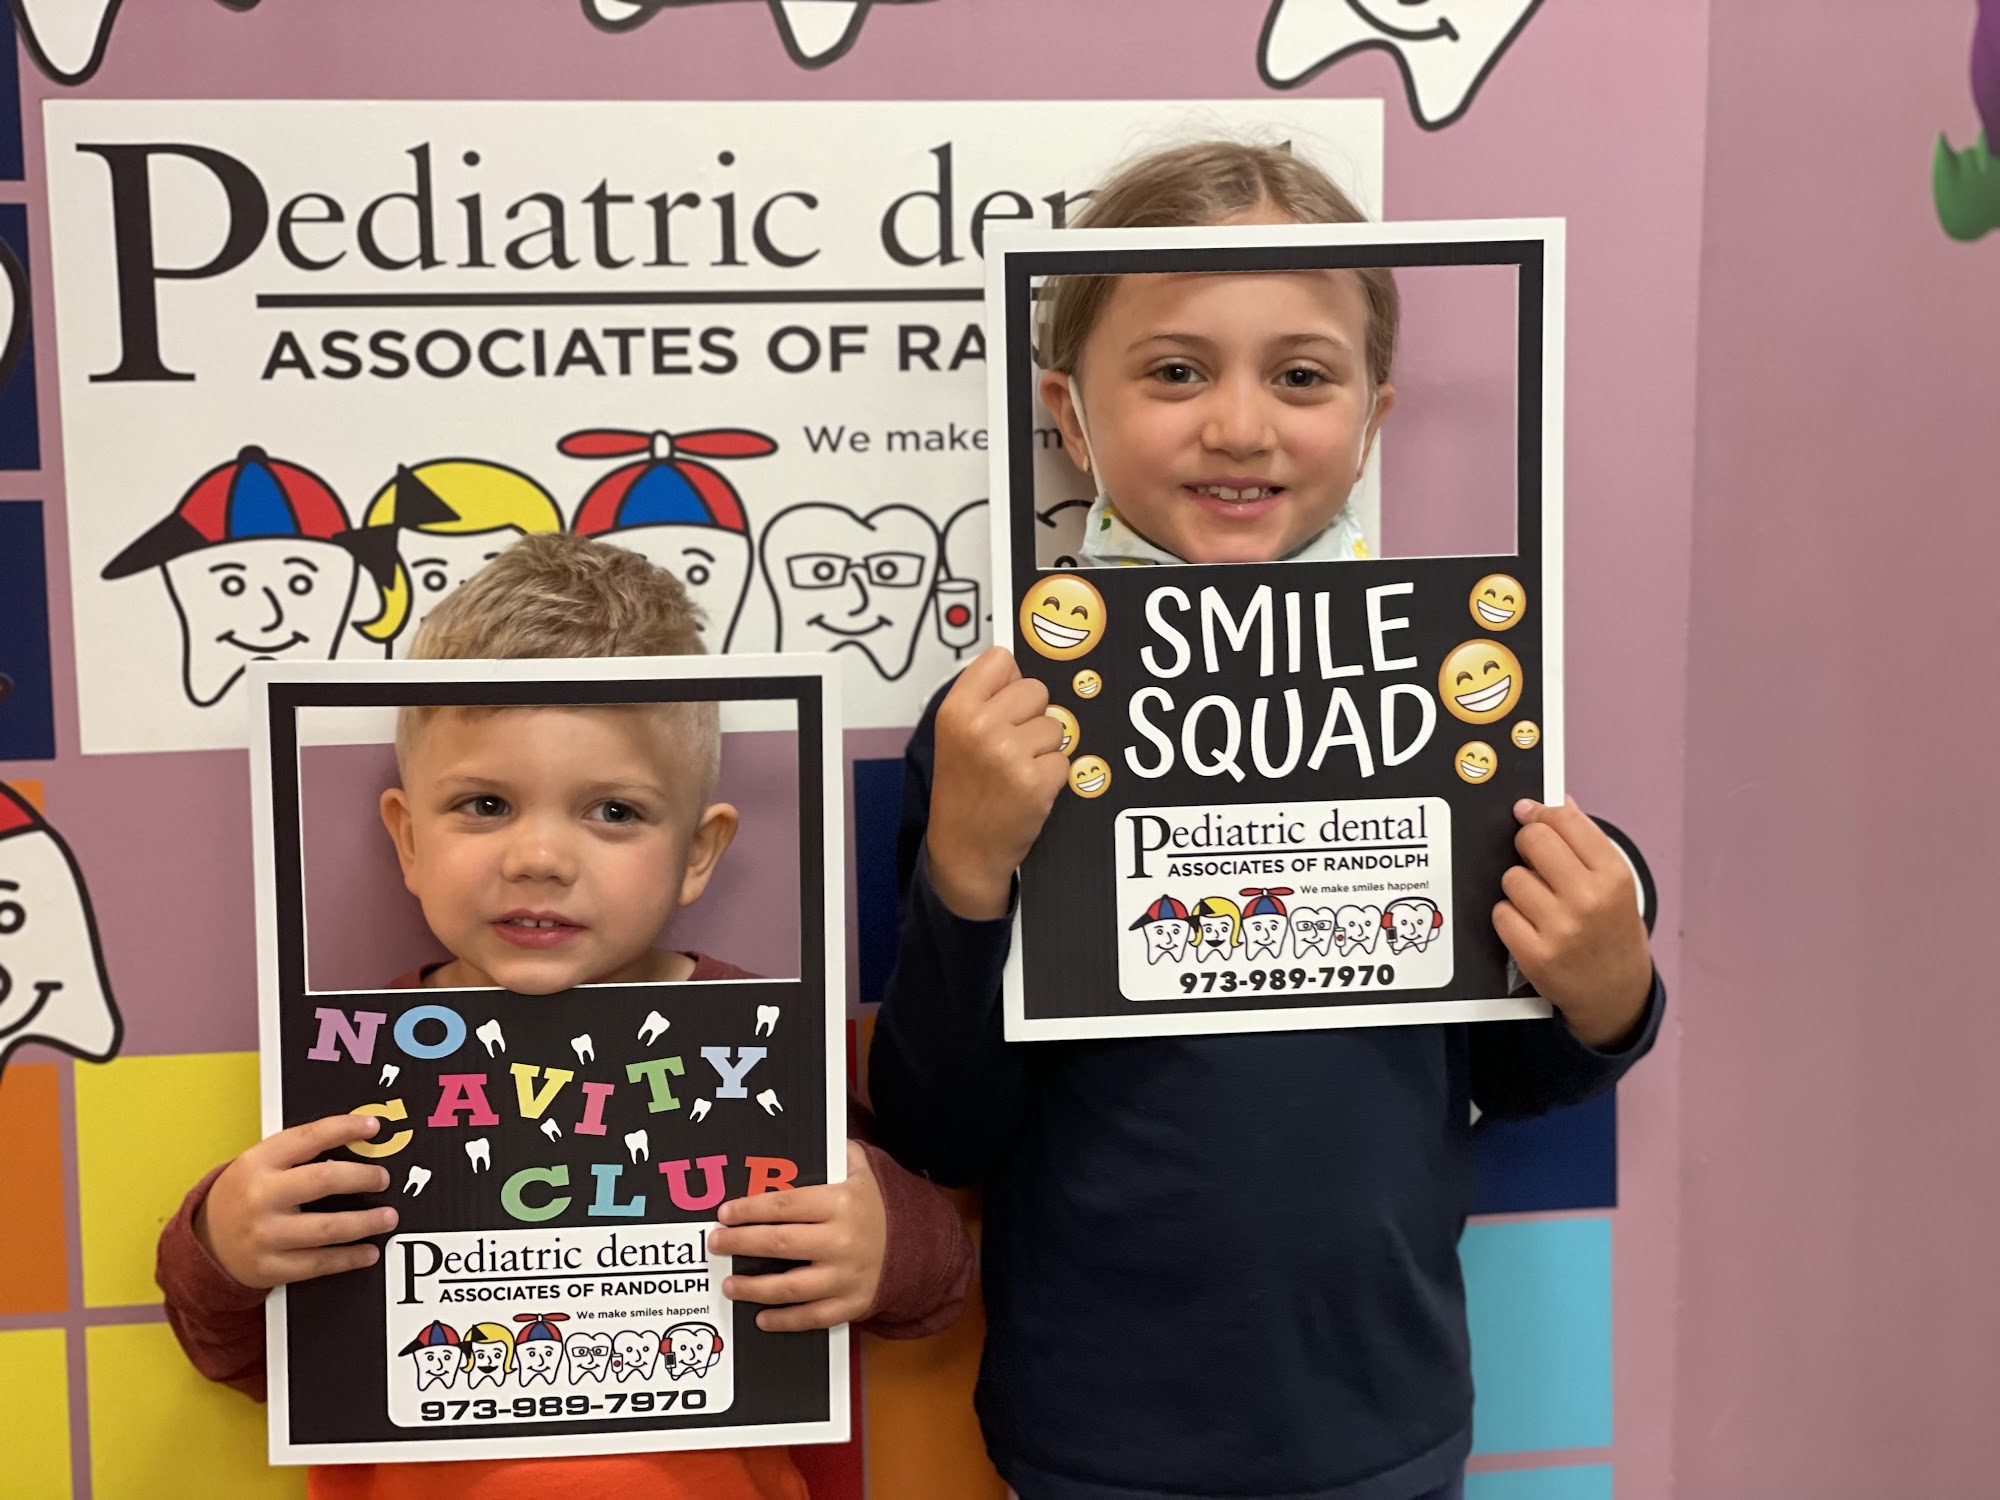 Pediatric Dental Associates of Randolph